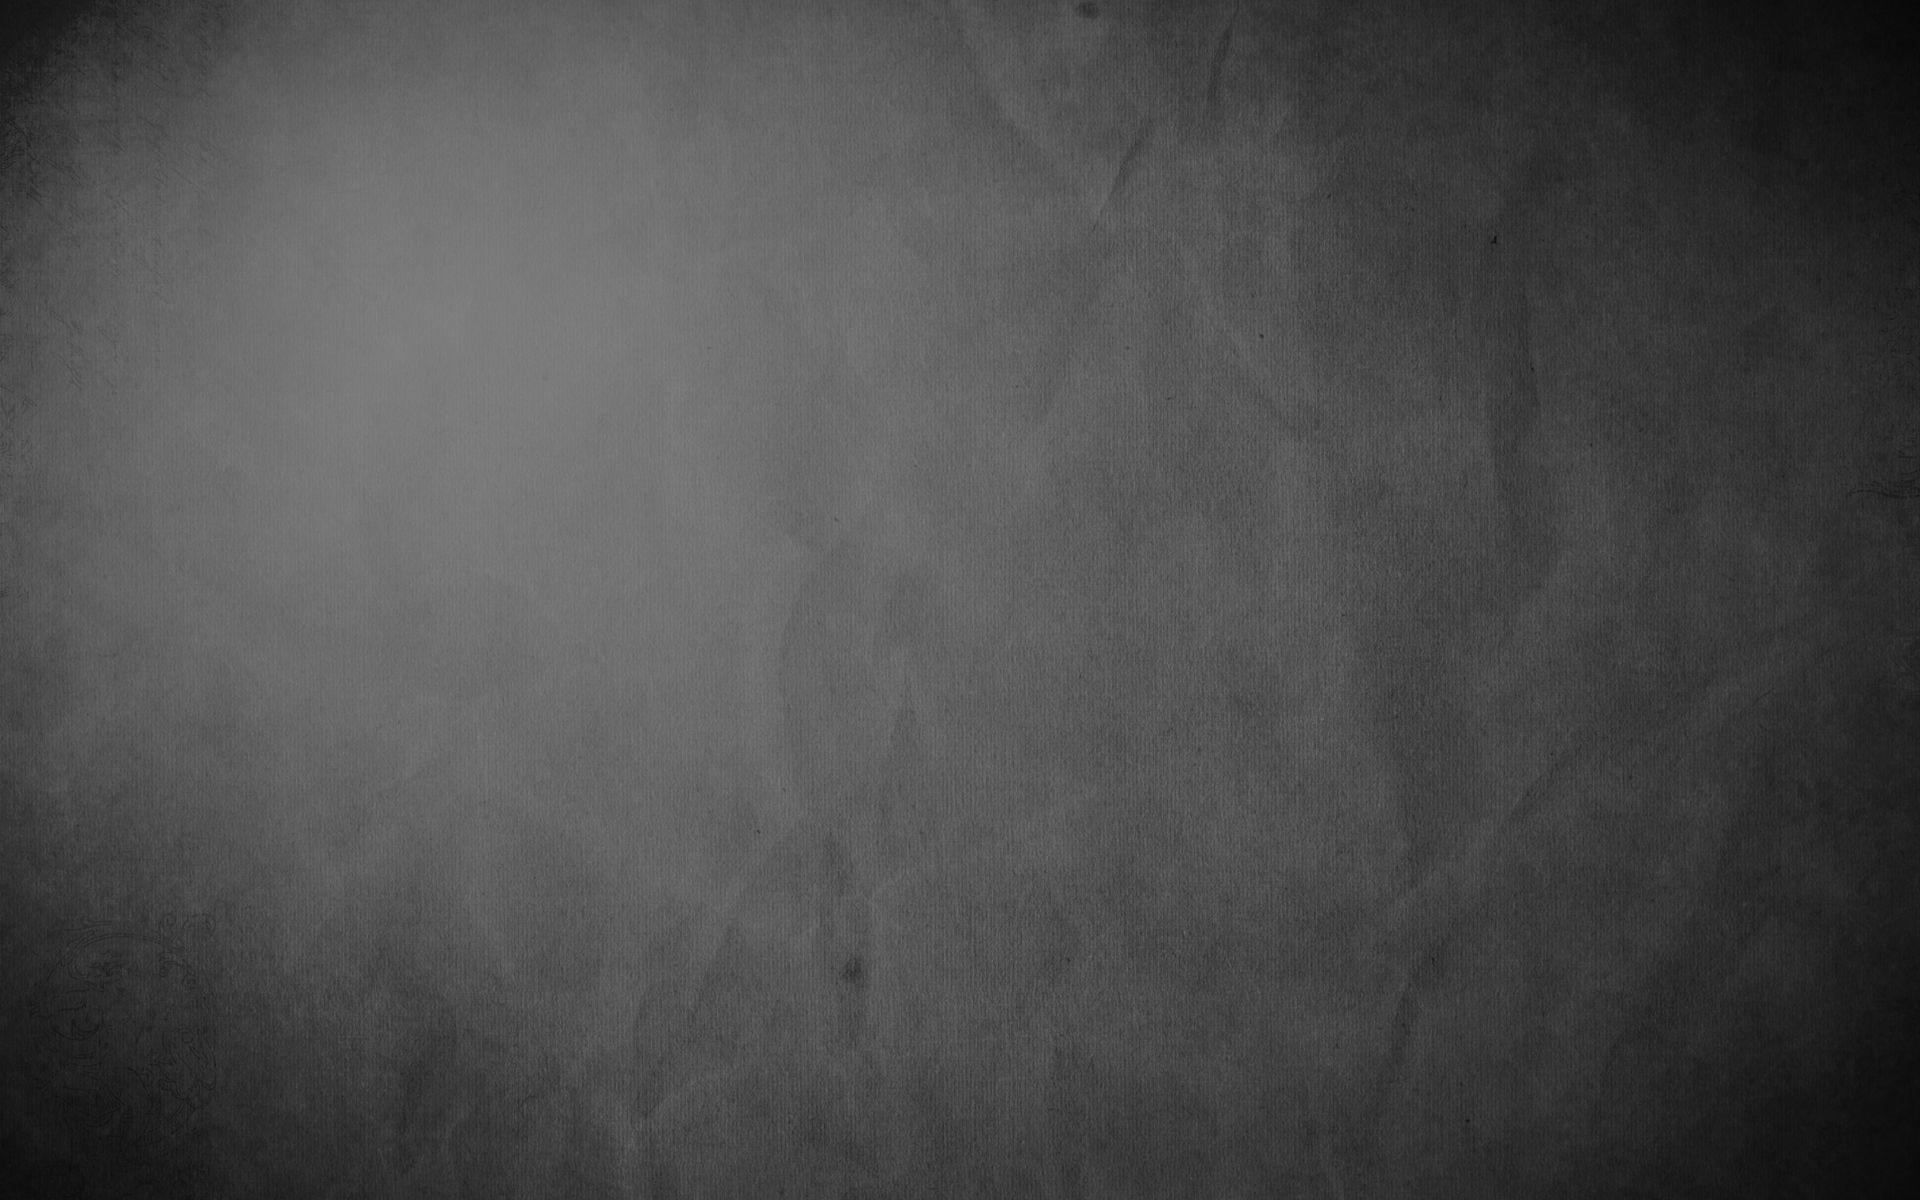 grunge background tumblr black and white